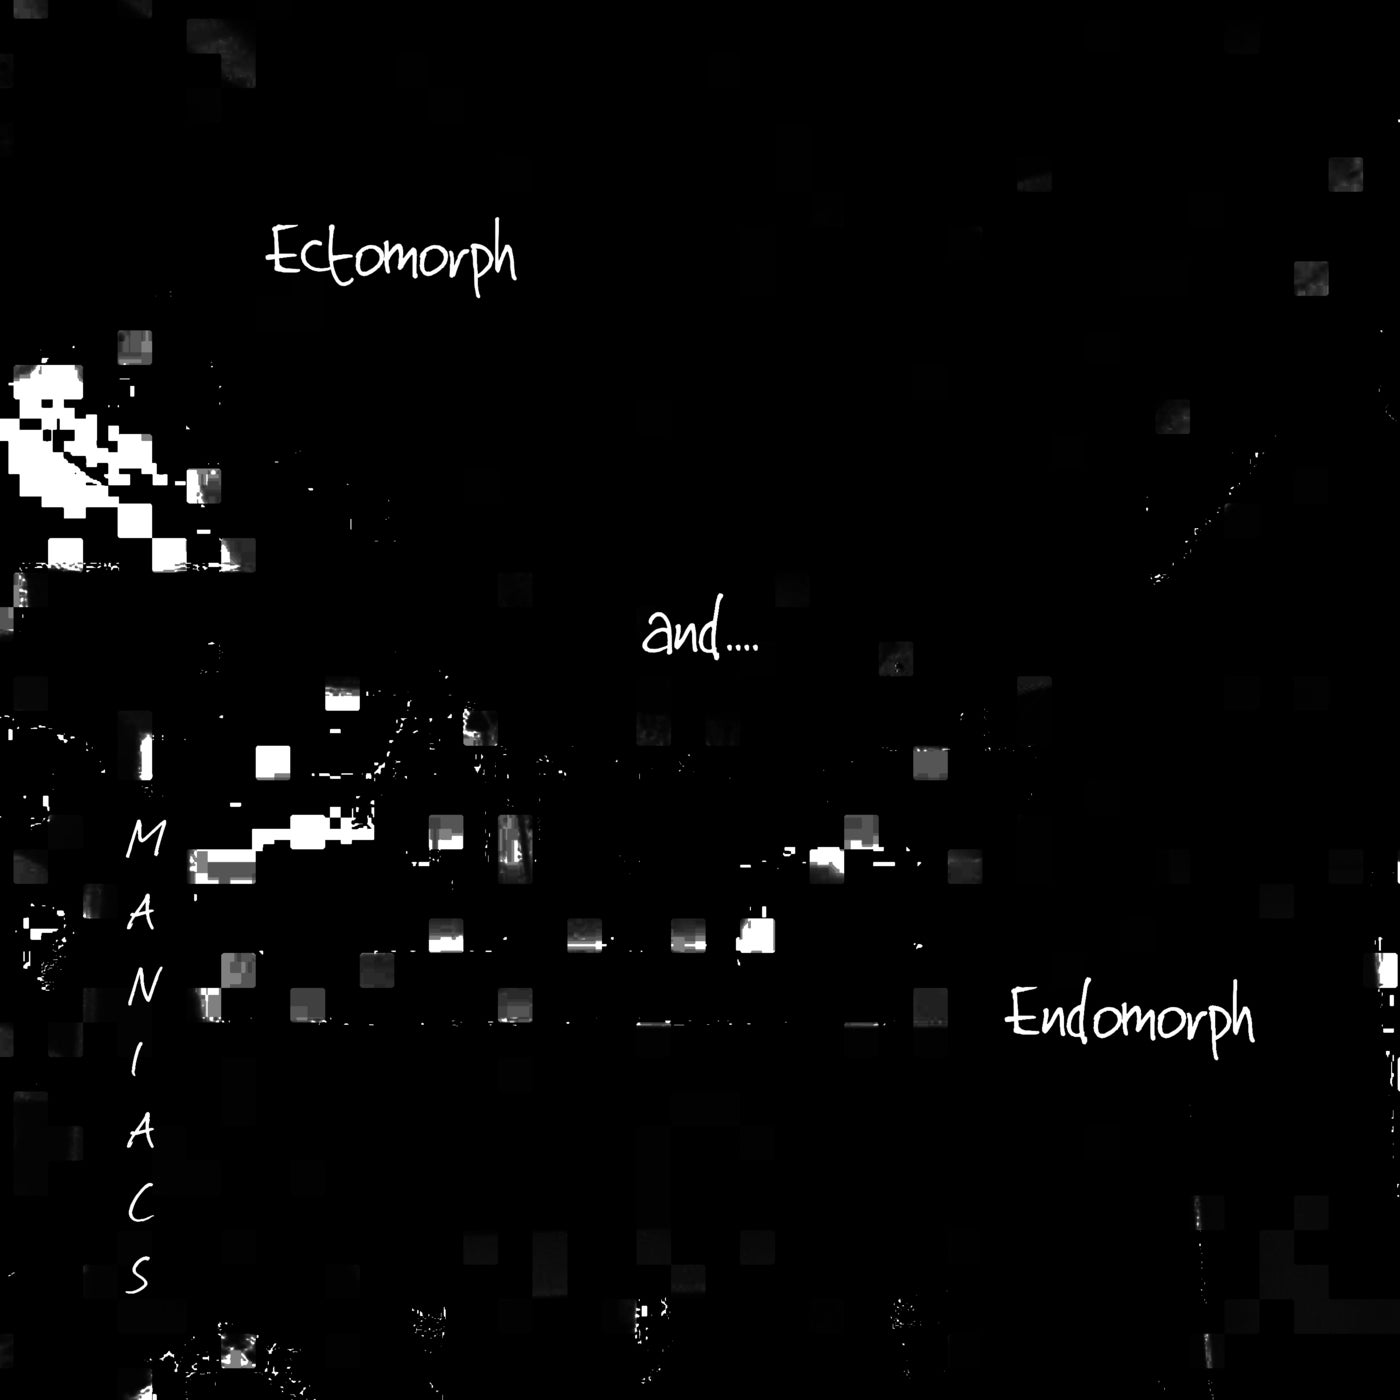 Ectomorph & Endomorph